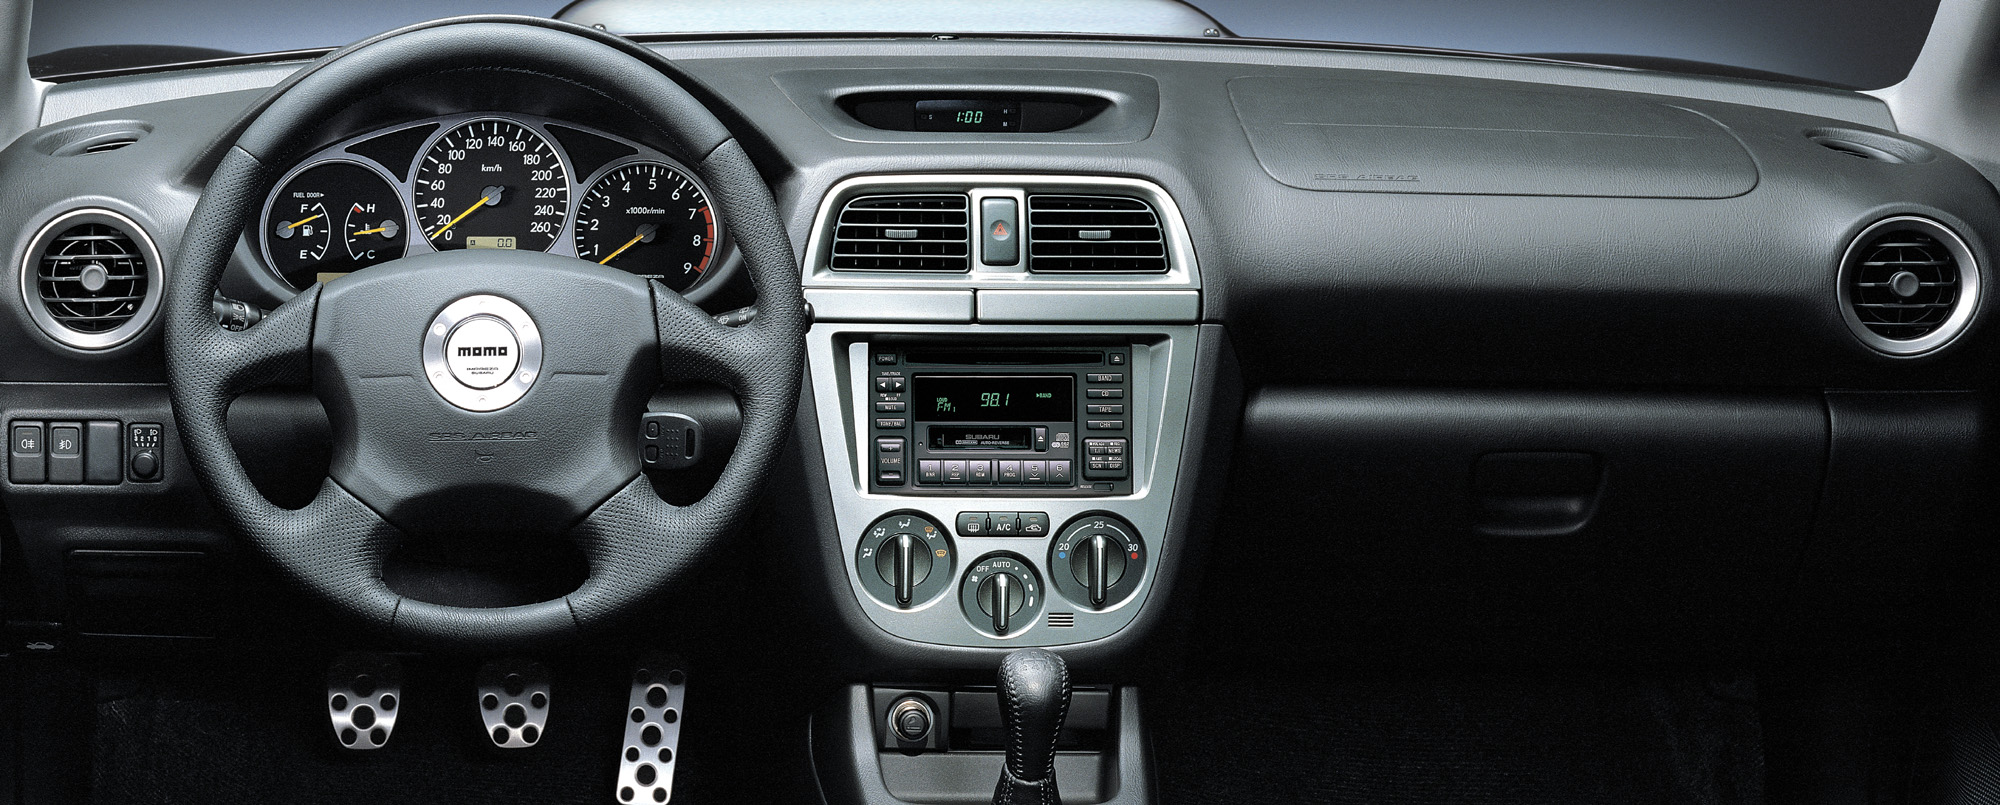 Subaru Impreza Wrx Doppel Din Radio Nachrusten Seite 2